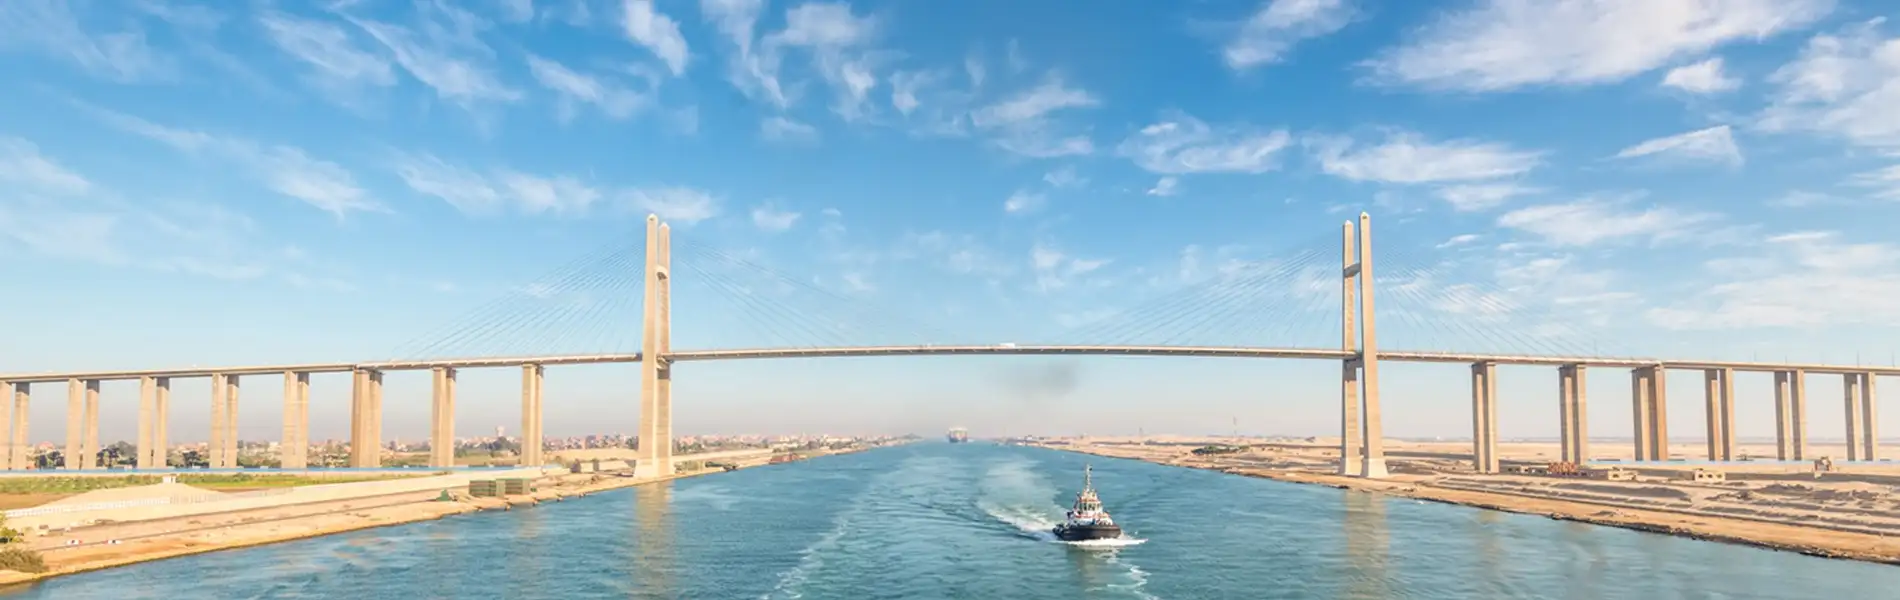 Suez Canal (Egypt)